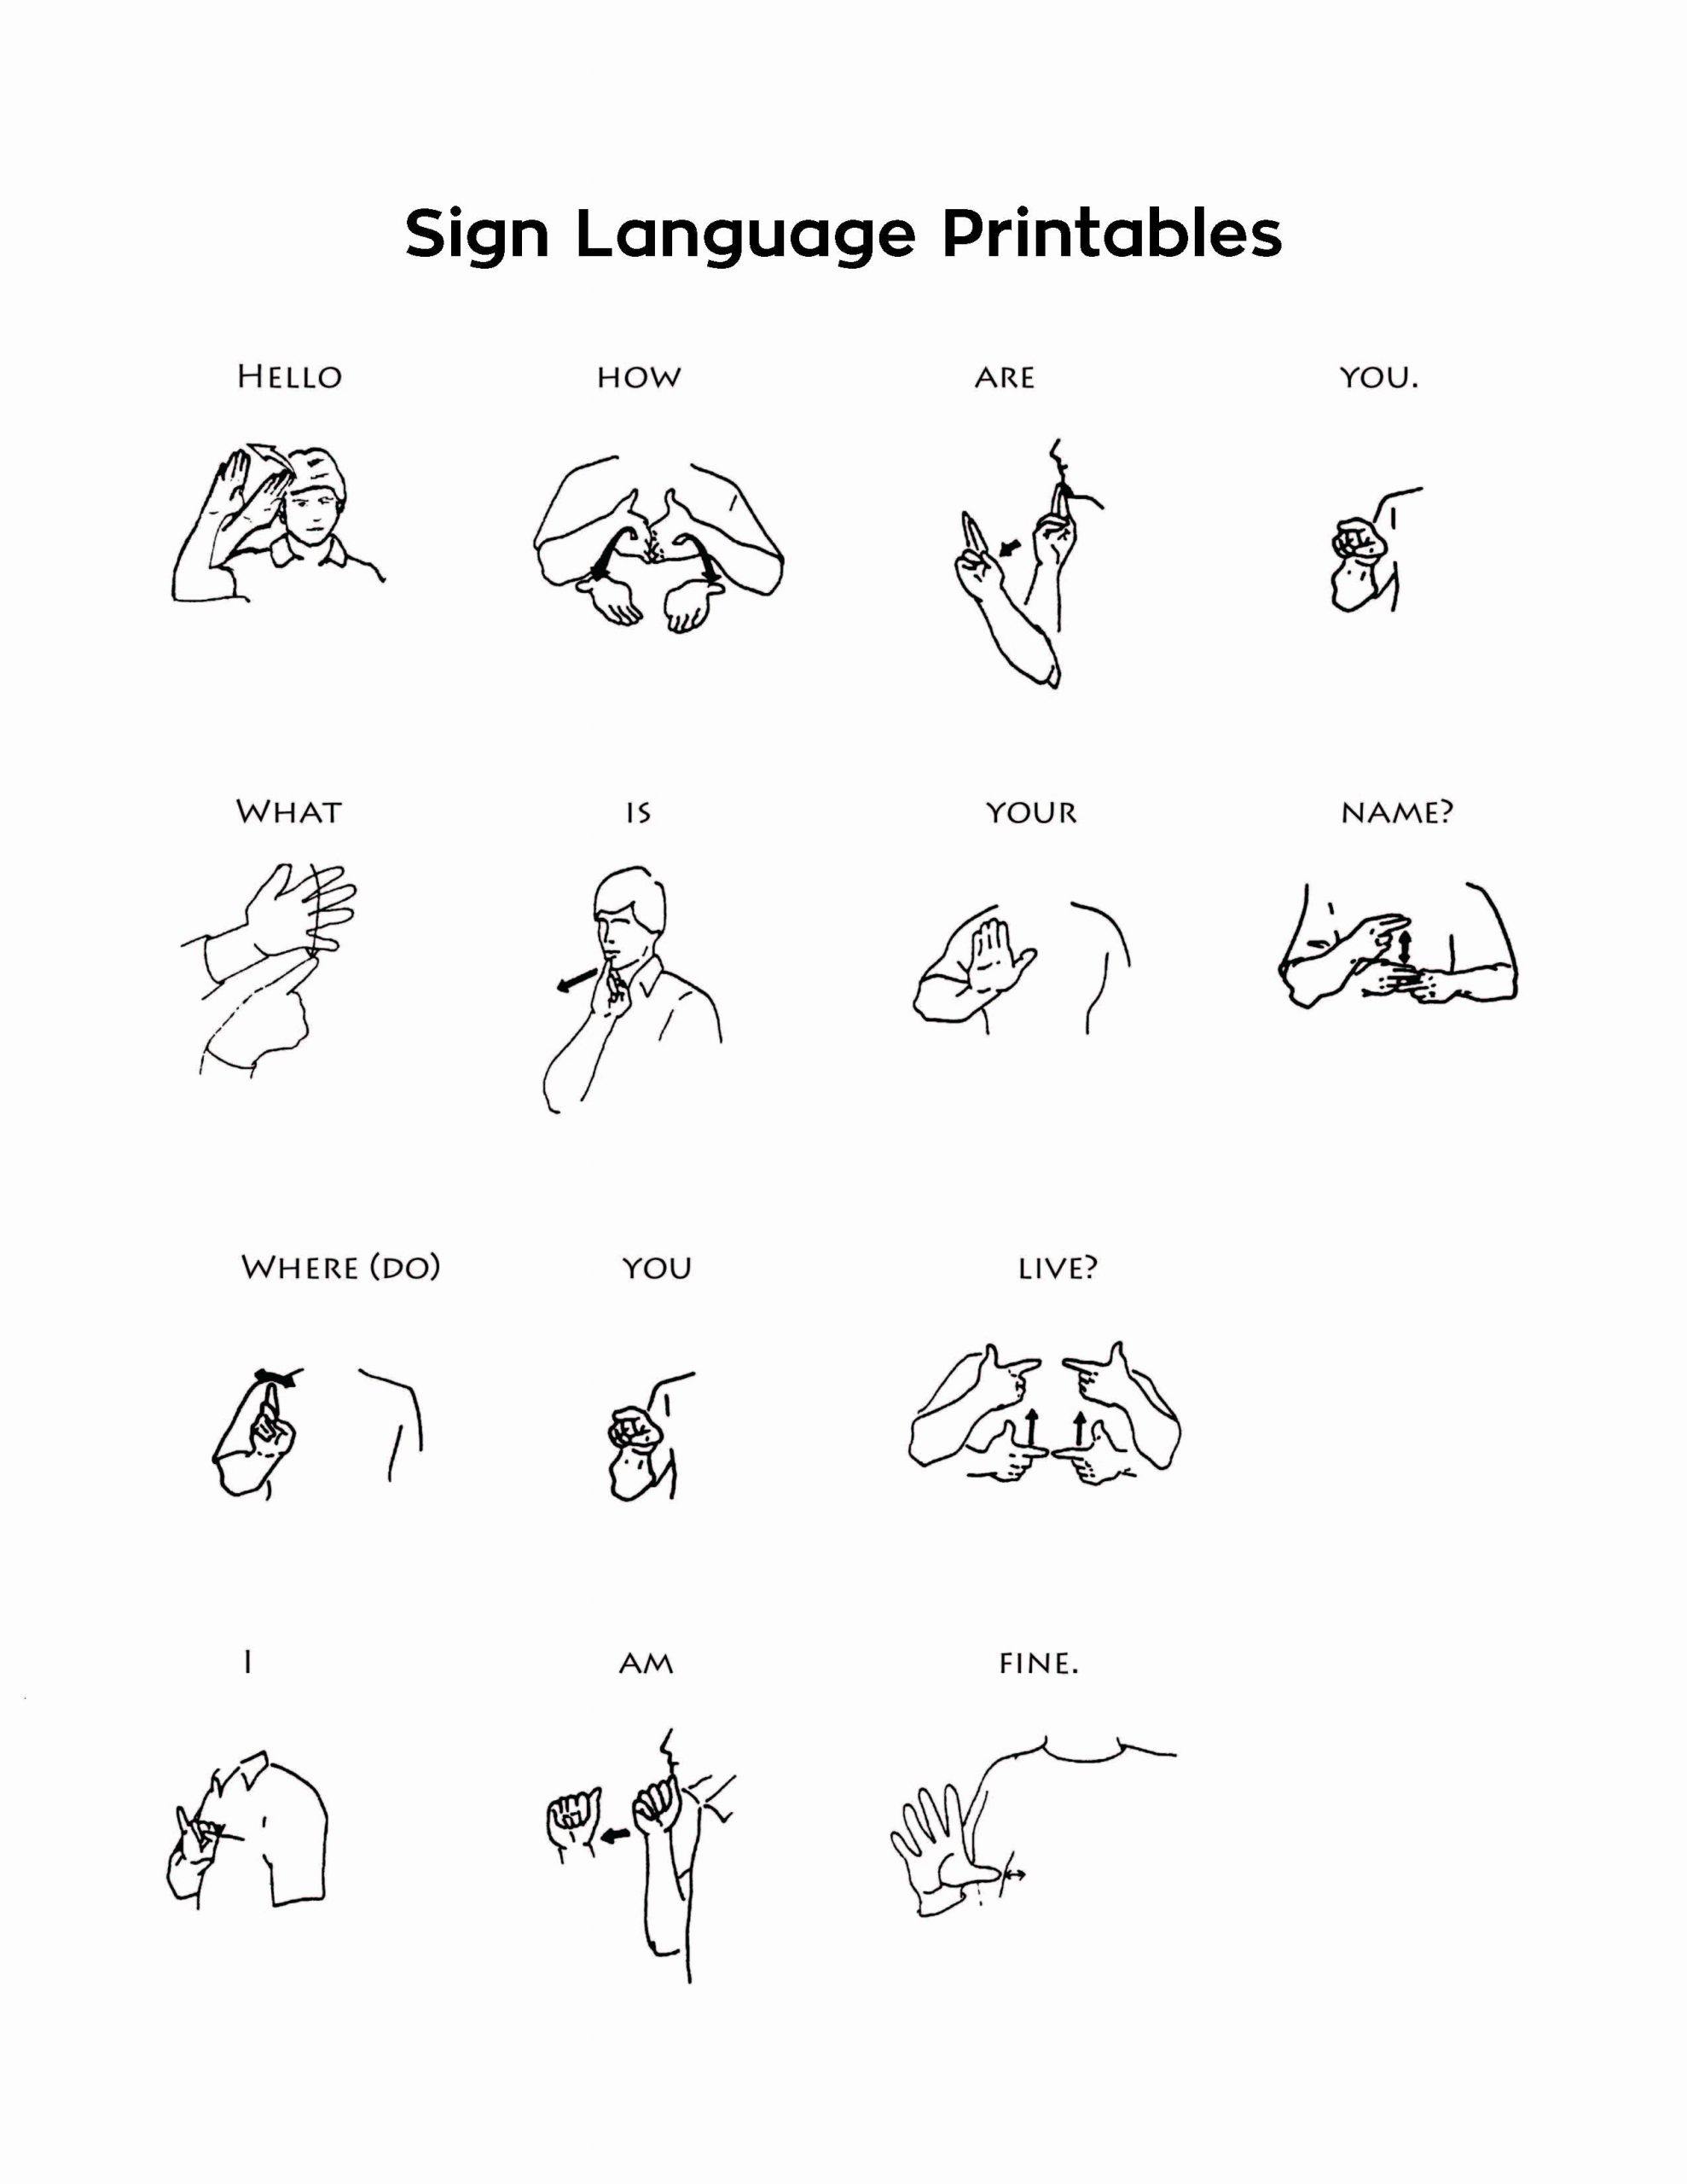 Sign Language Printable Worksheets New Meeting 14 Sign Language Printables for Teaching Your